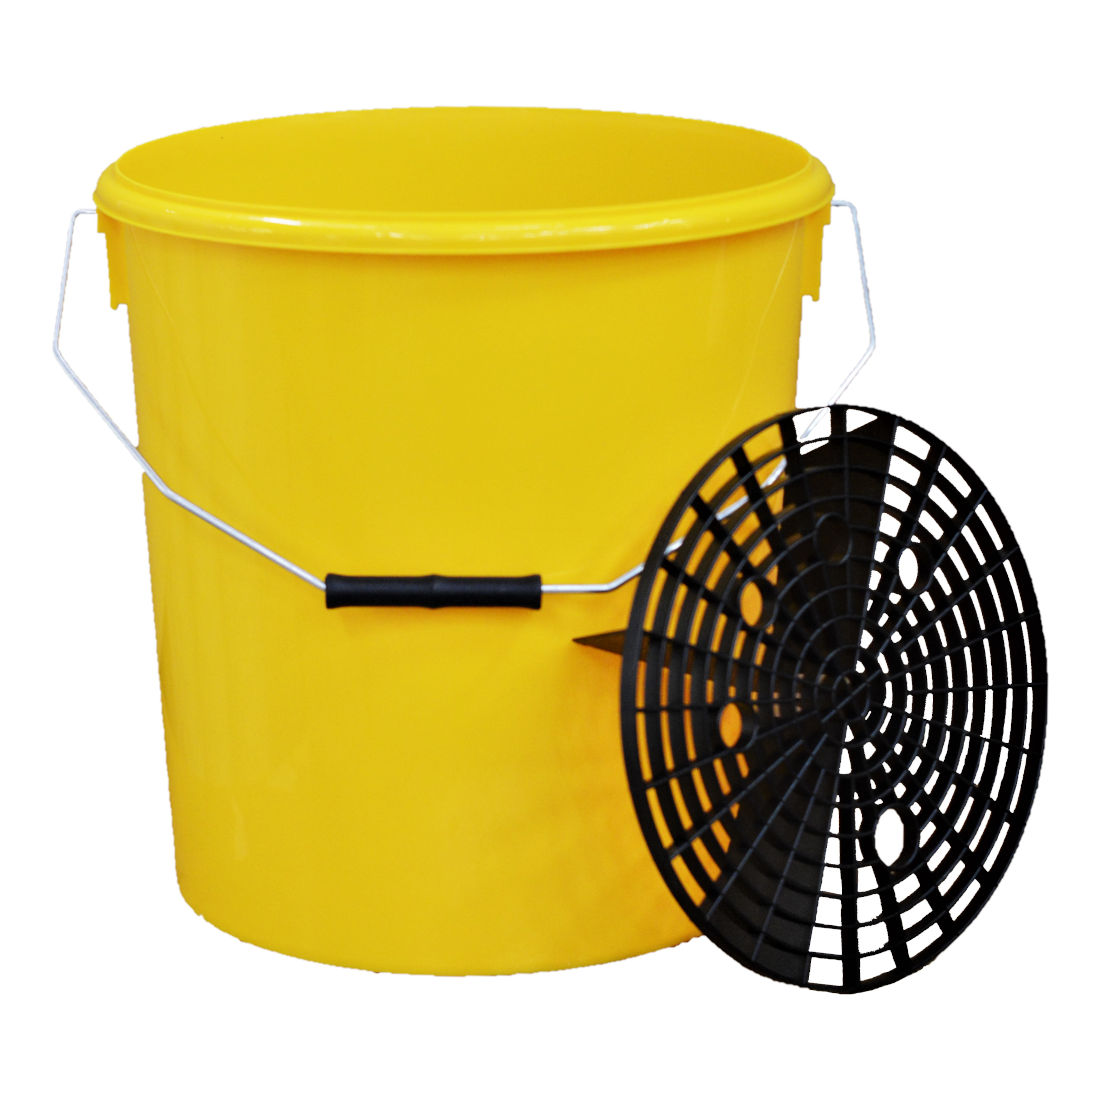 16L Standard Yellow Car Detailing Bucket with Grit Shield - H&O Plastics